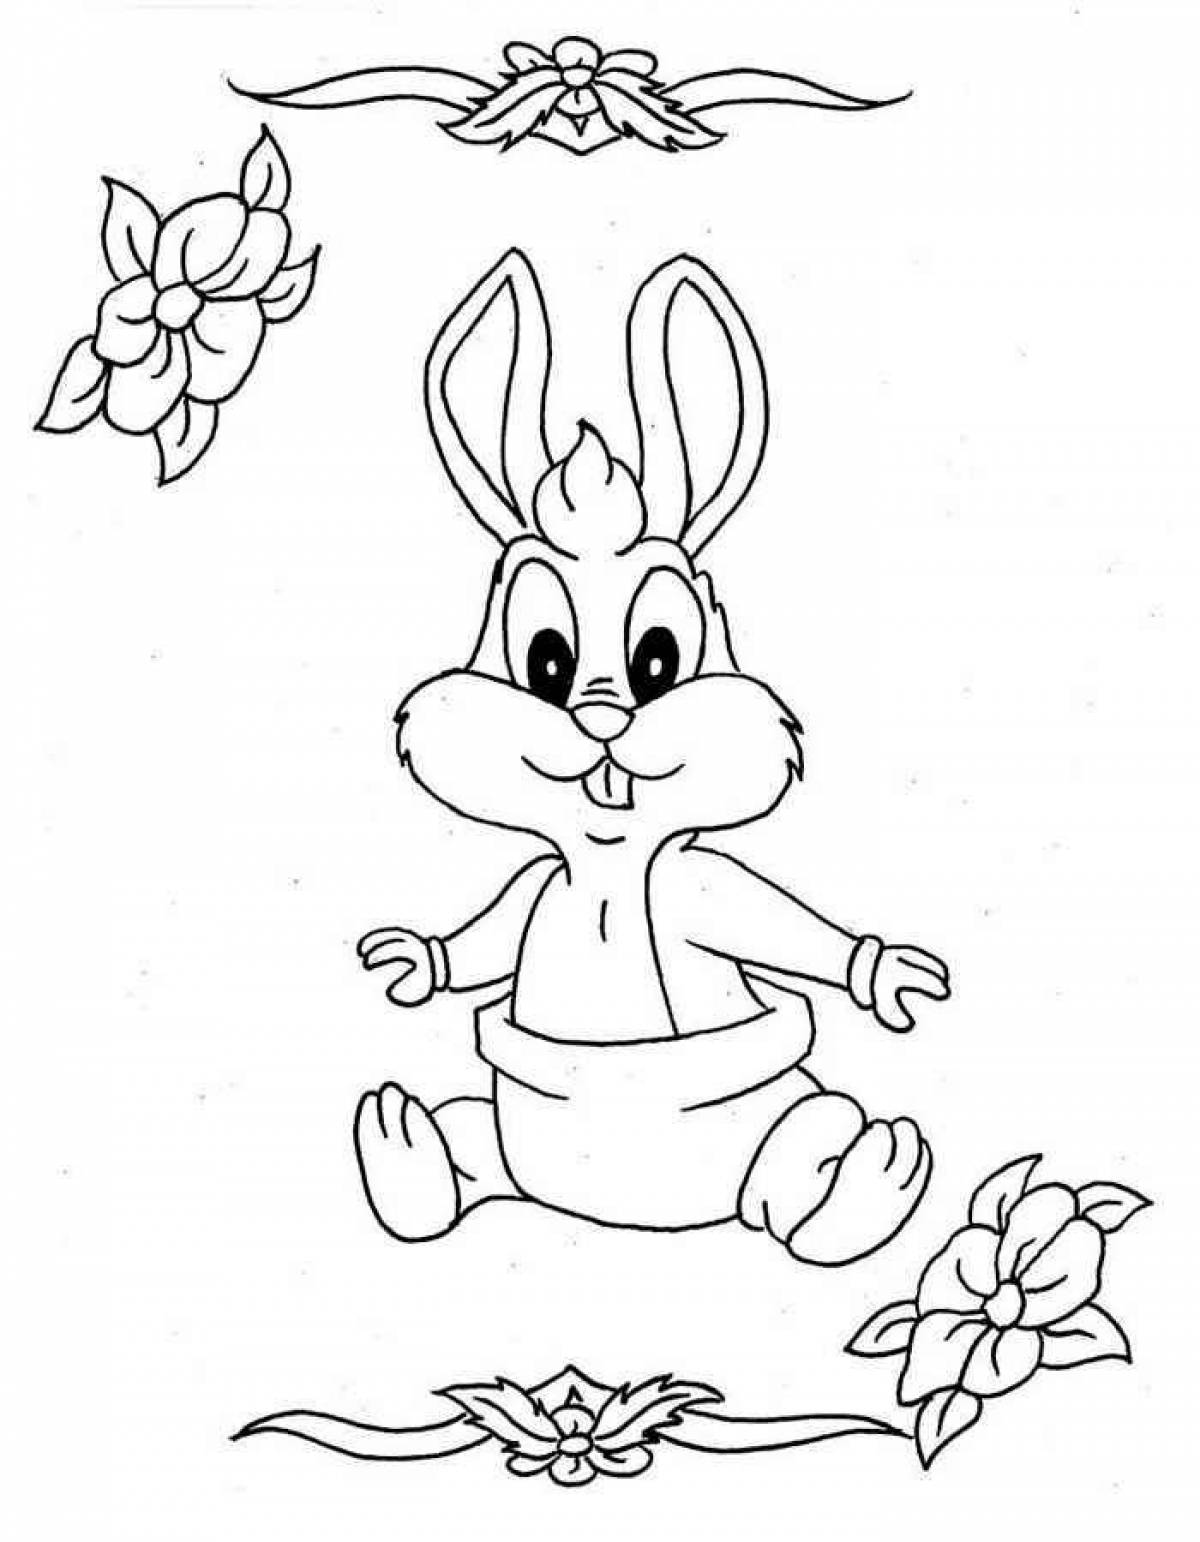 Jolly rabbit coloring book